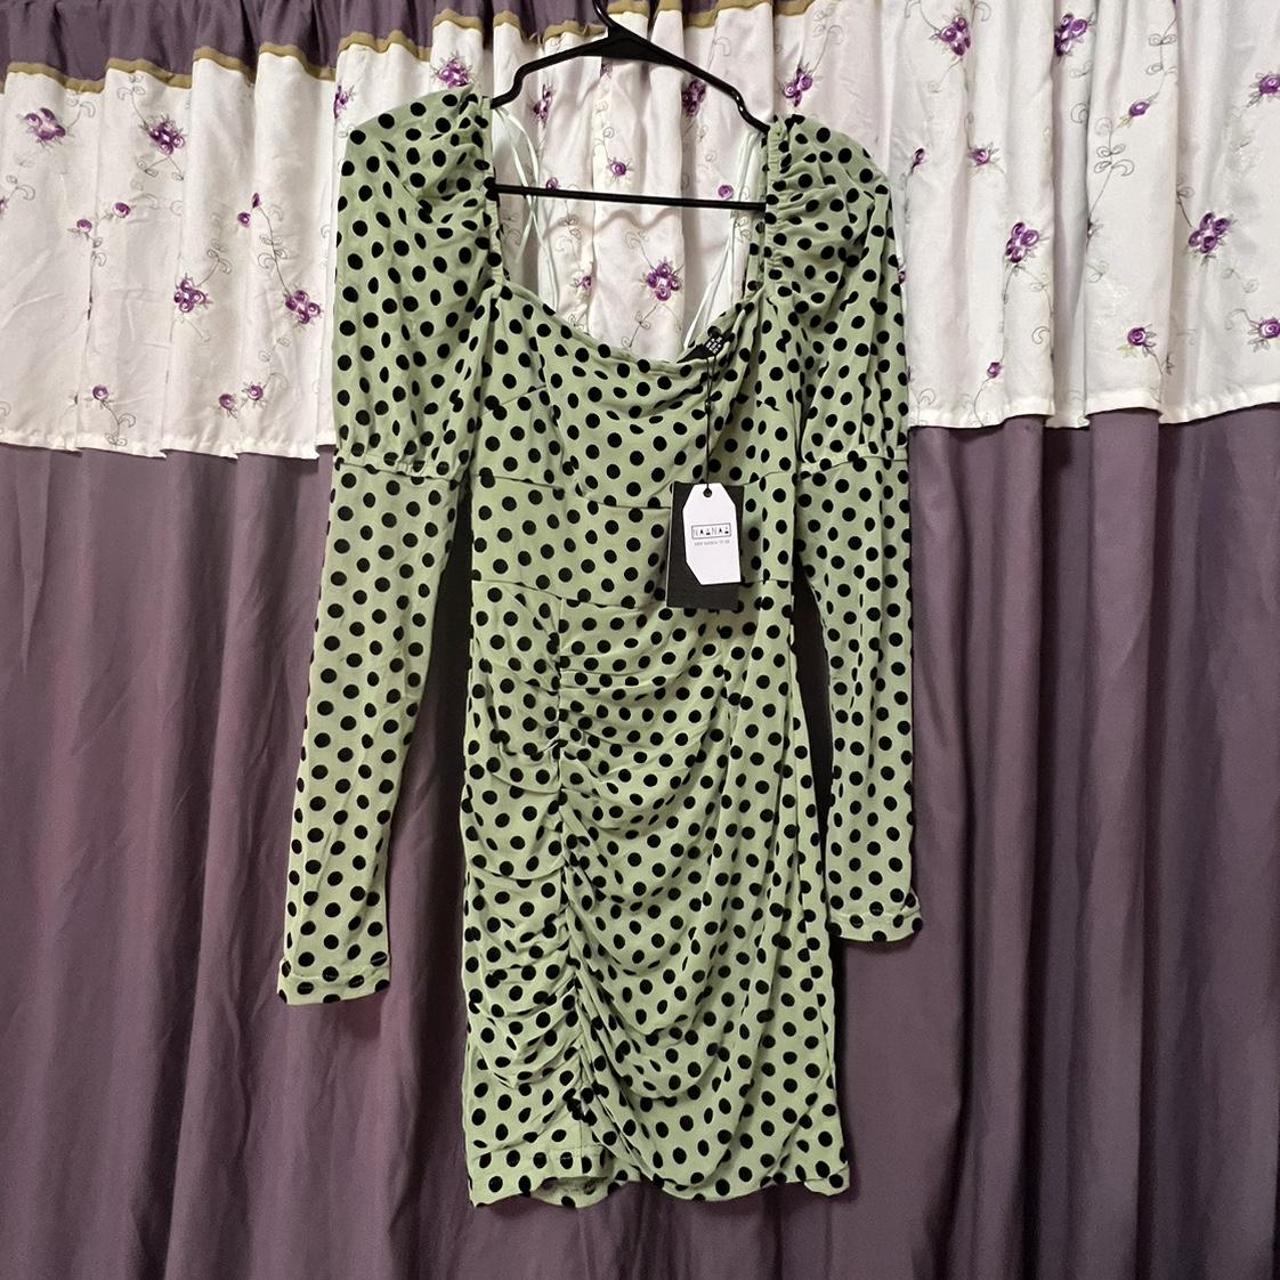 NaaNaa Women's Green Dress